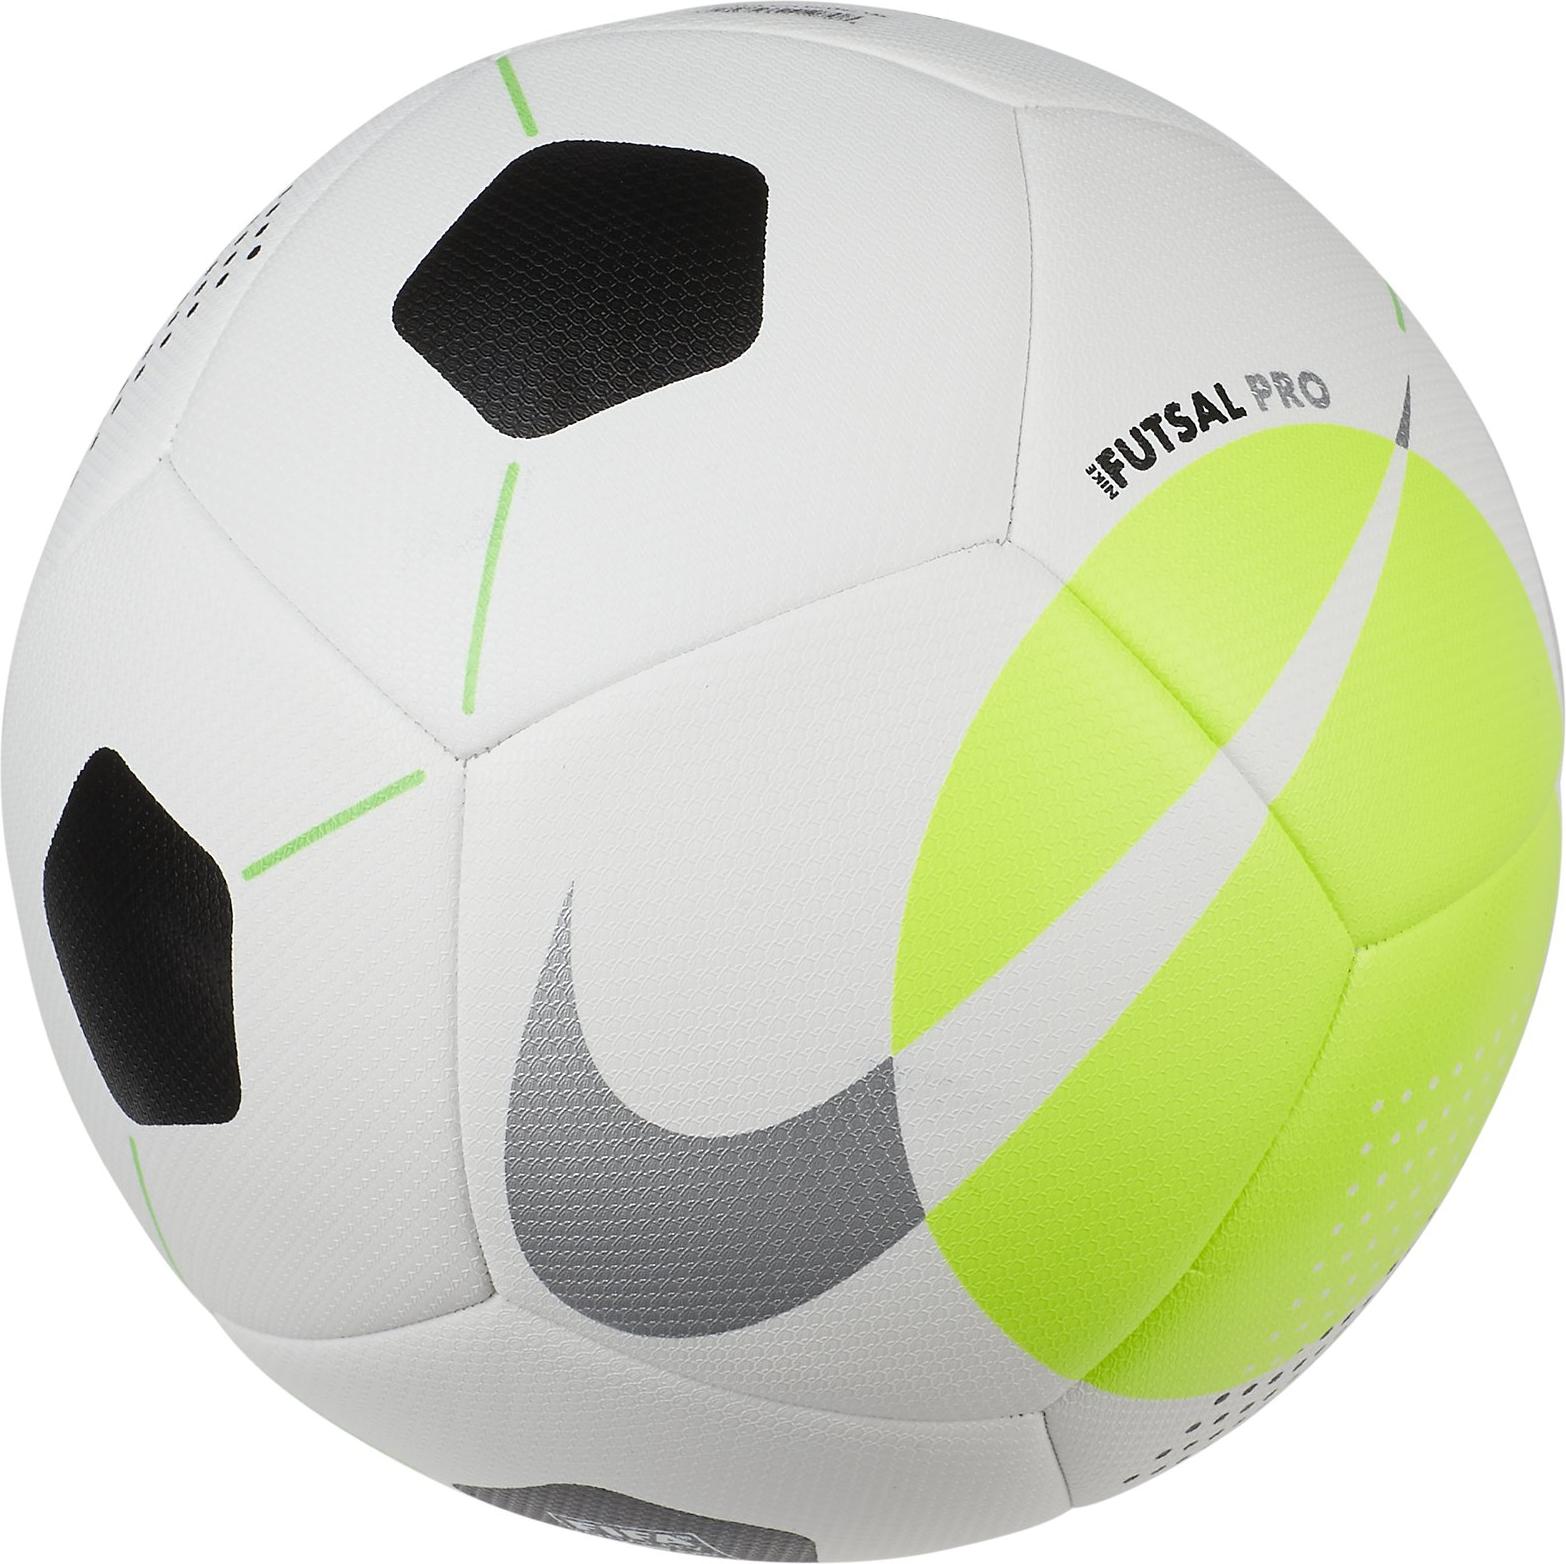 Žoga Nike Futsal Pro Soccer Ball